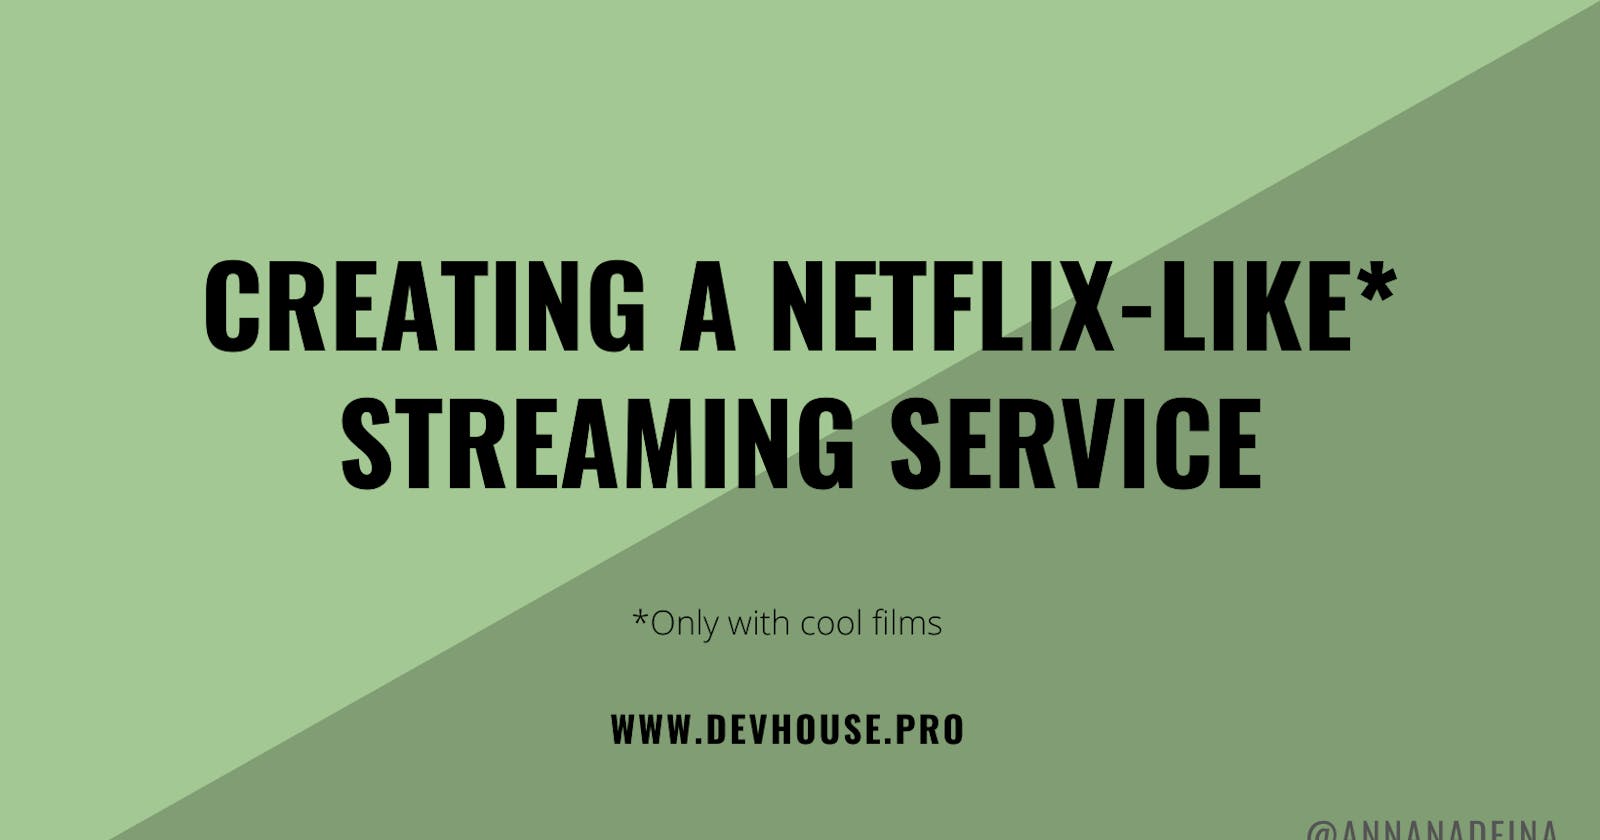 Creating a Netflix-like streaming service